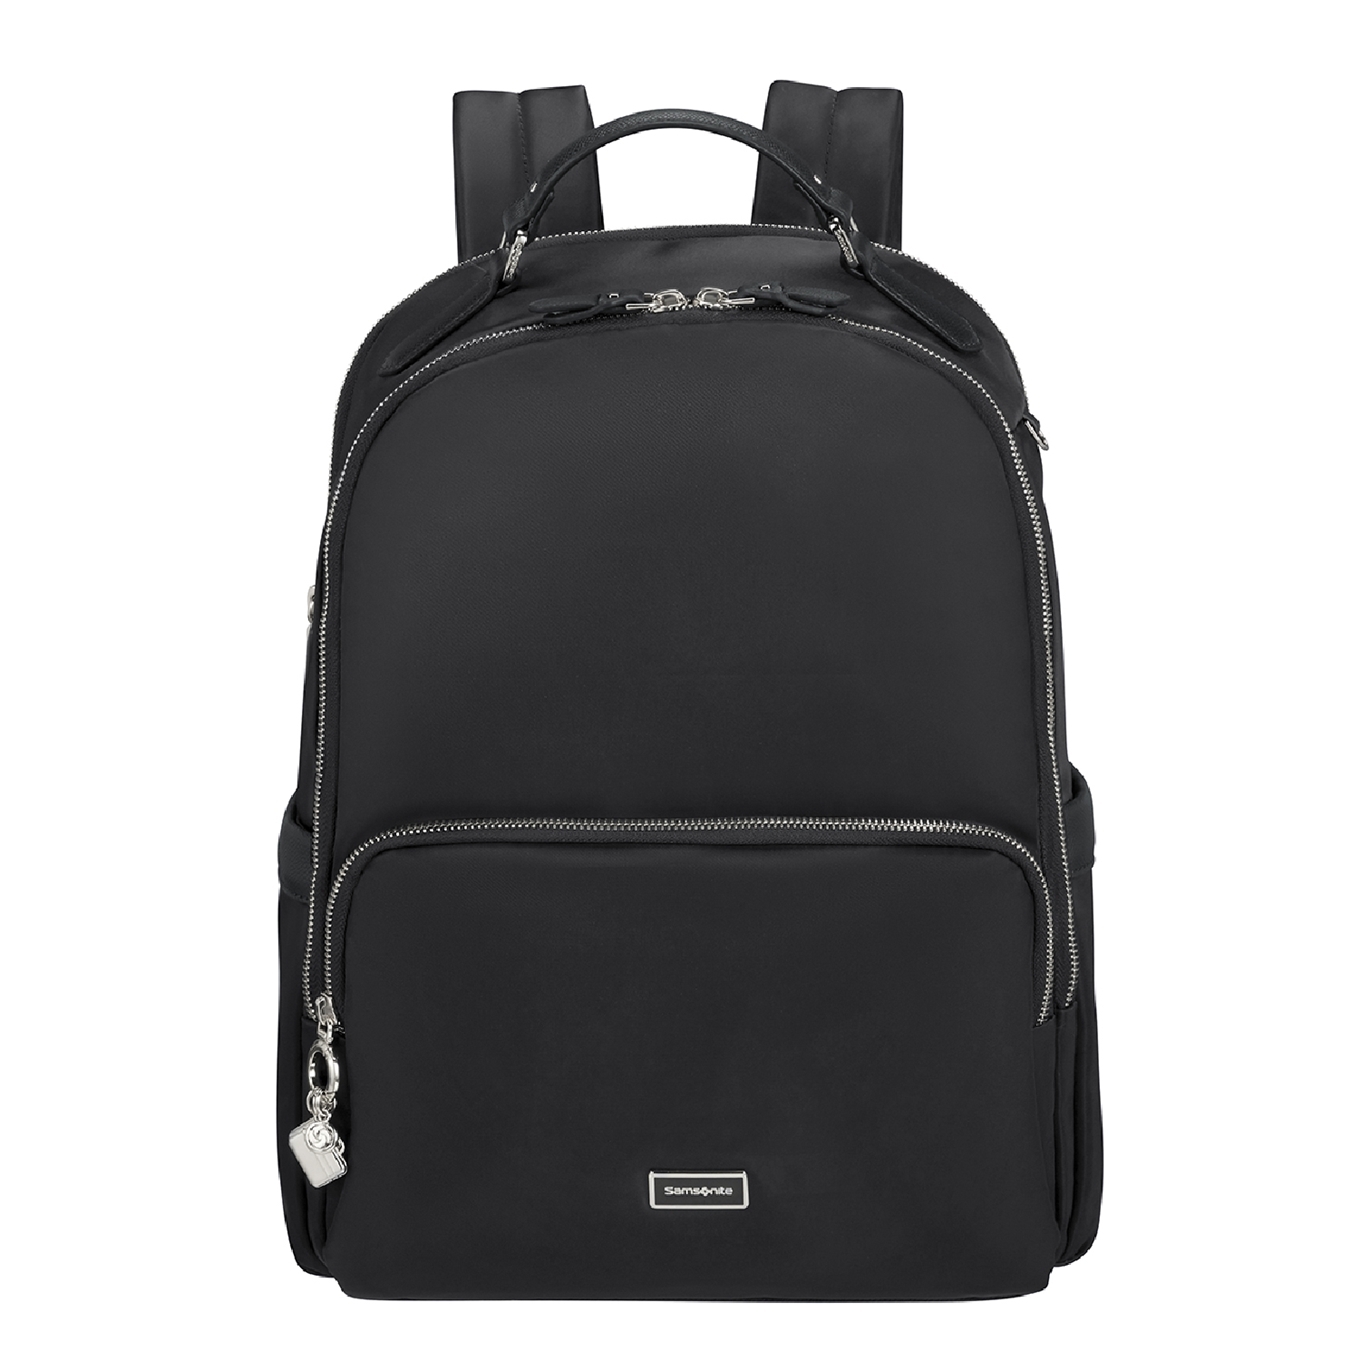 Samsonite Laptoprugzak - Karissa Biz 2.0 Backpack 14.1"" Black"